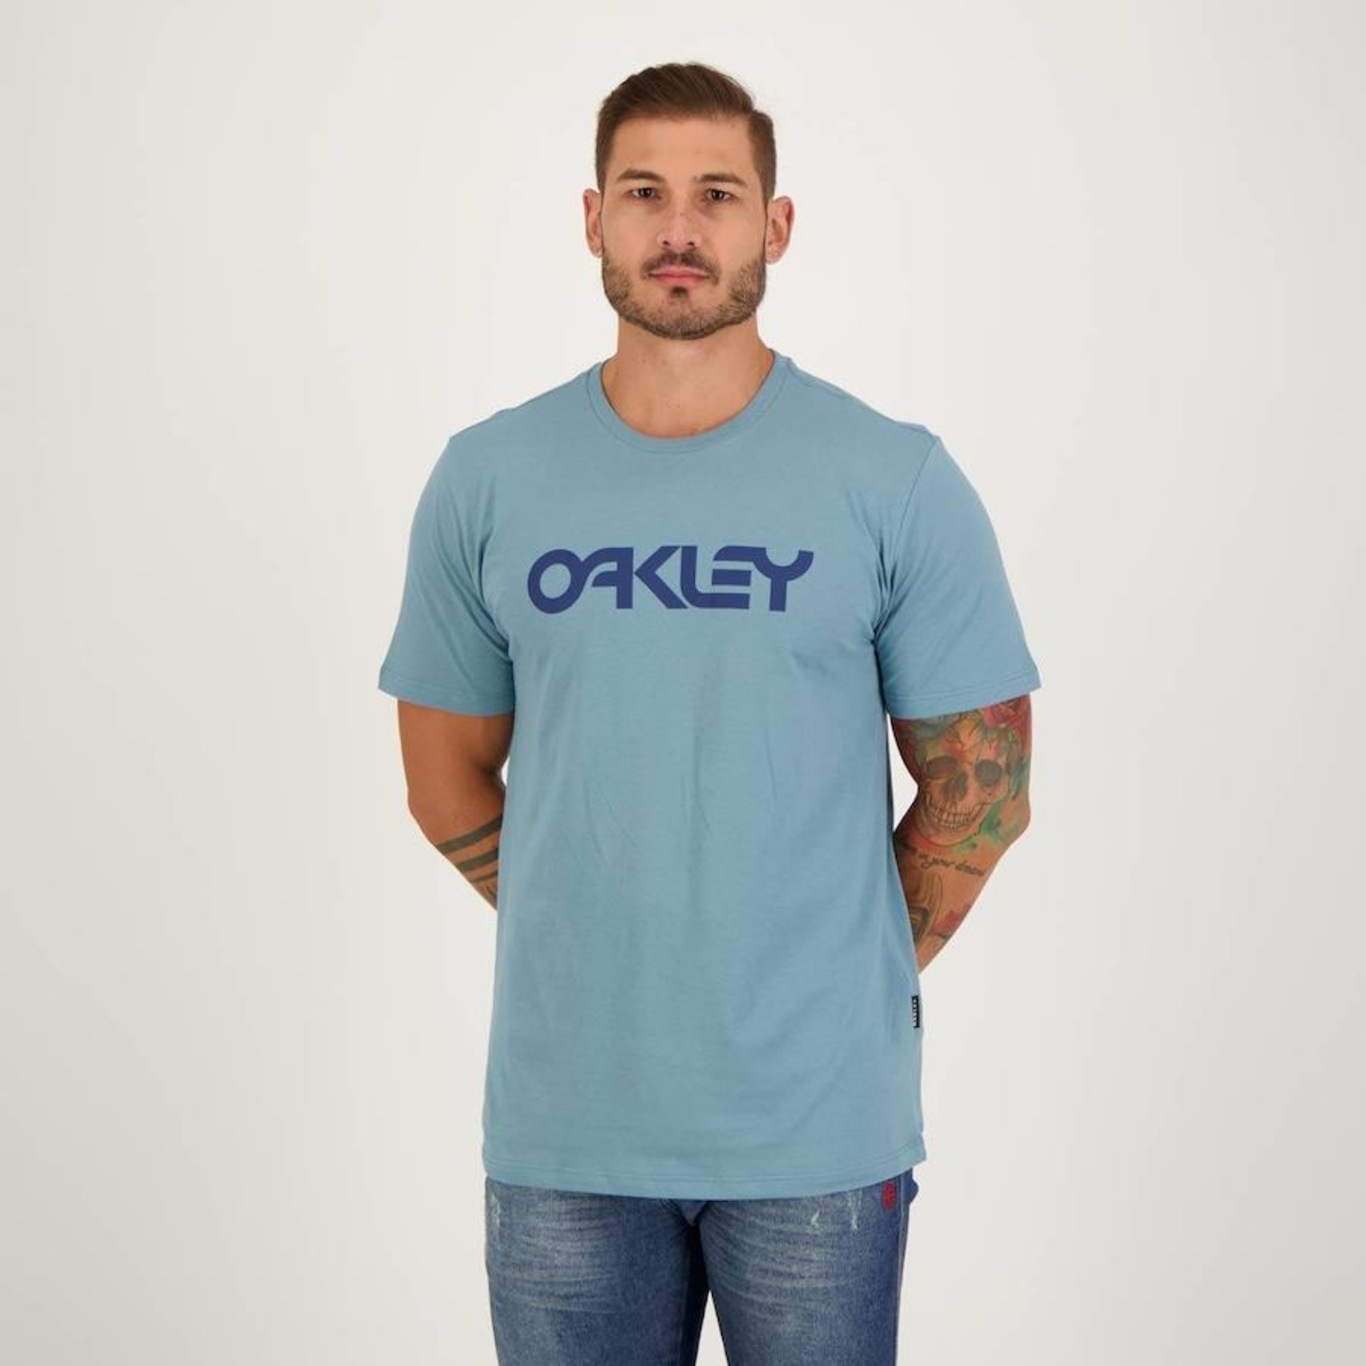 Camisas e camisetas Femininas no Brasil, camiseta oakley feminina